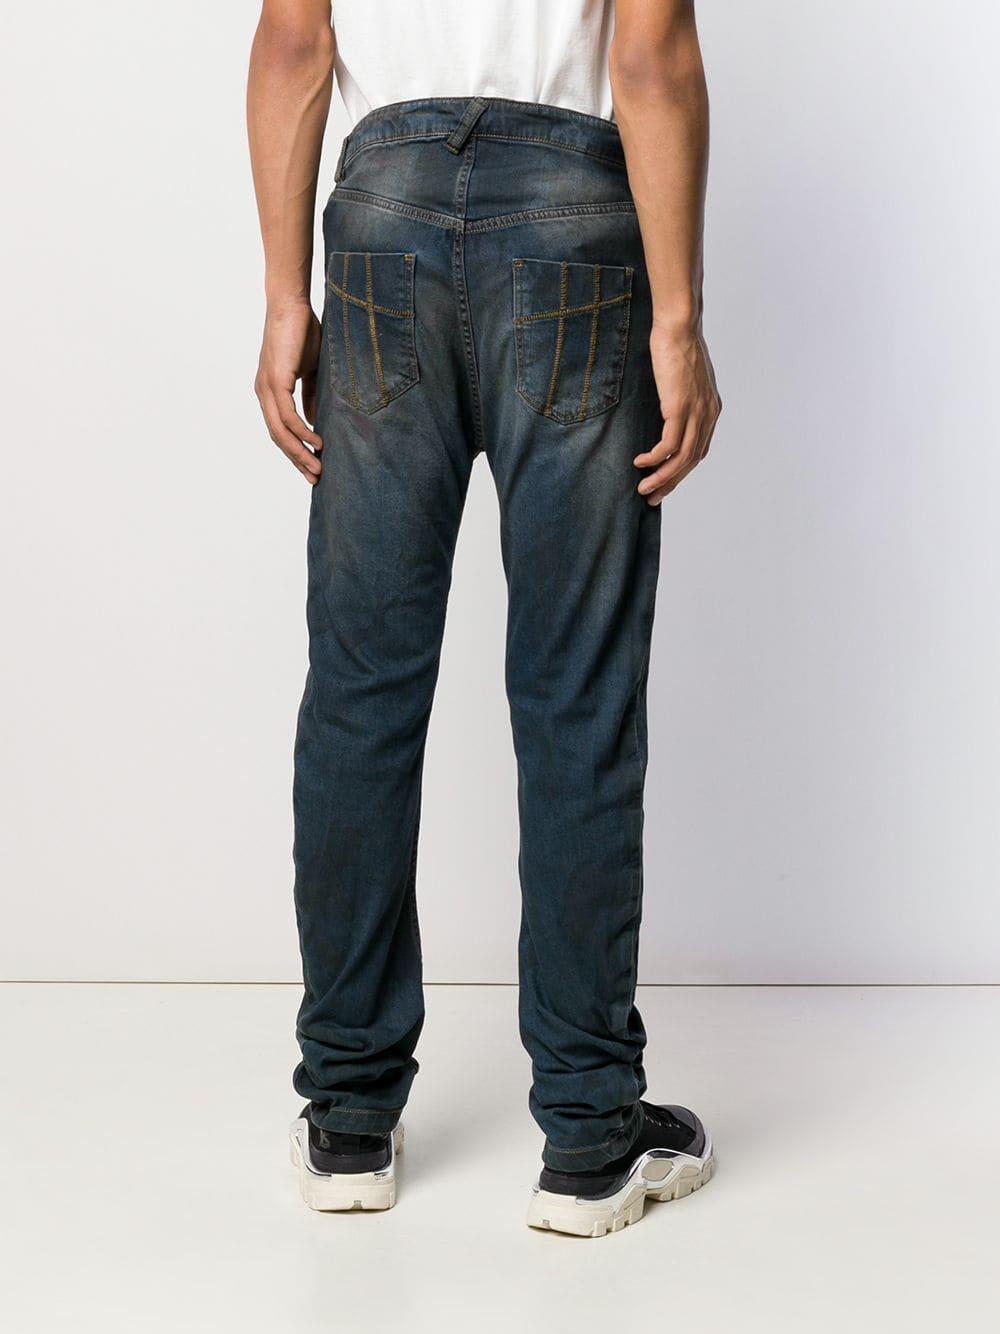 Boris Bidjan Saberi 11 Jeans With Contrast Stitching in Blue for Men - Lyst